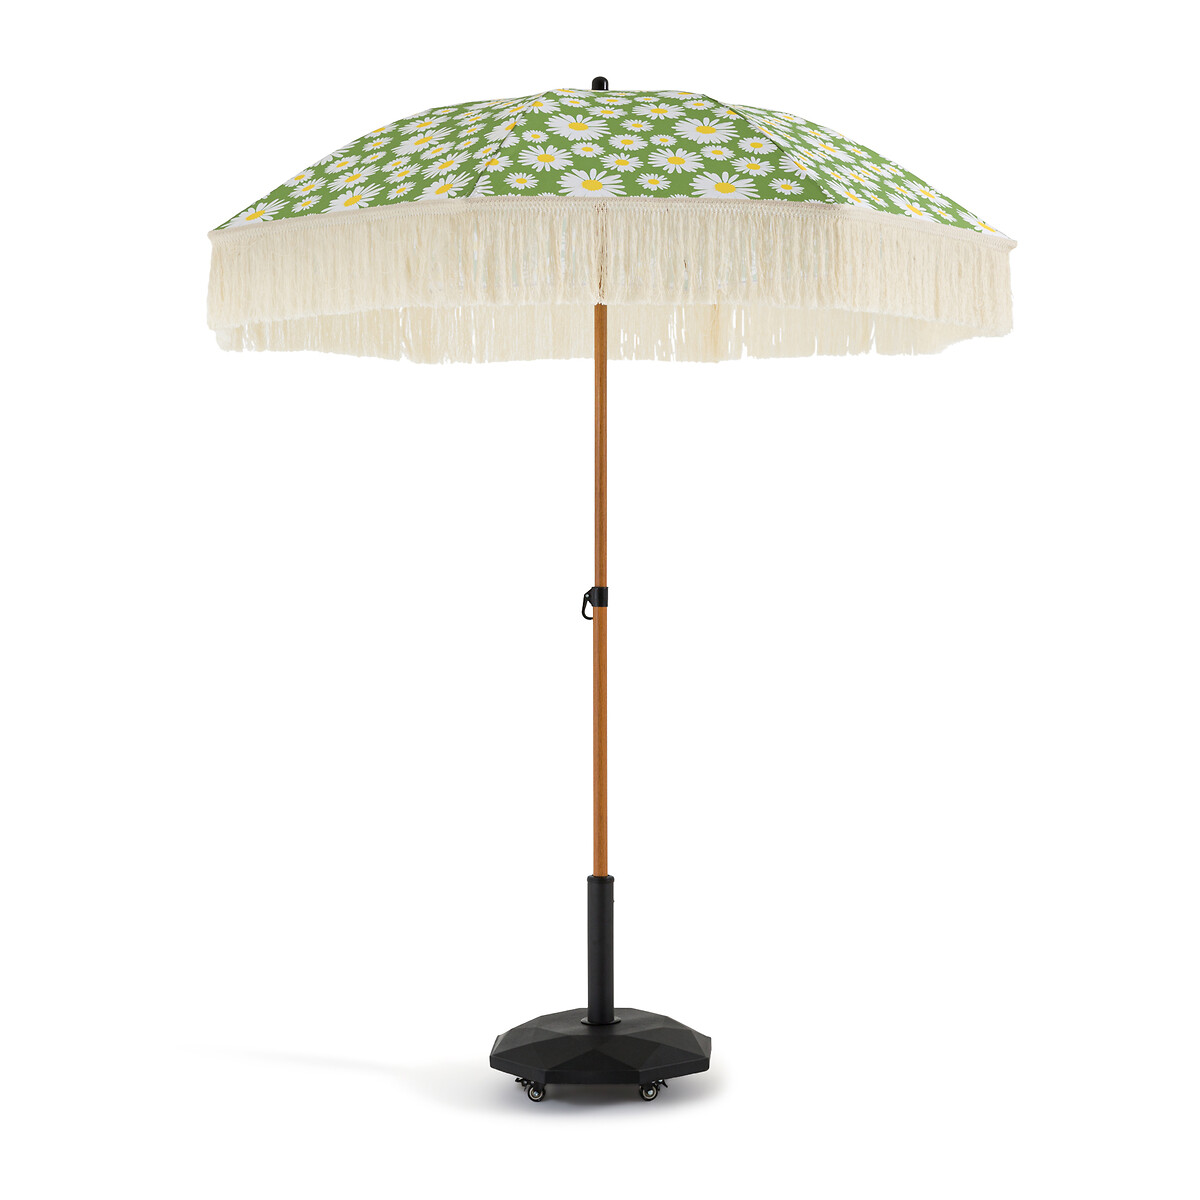 LA REDOUTE INTERIEURS Bedrukte parasol met franjes, Larna